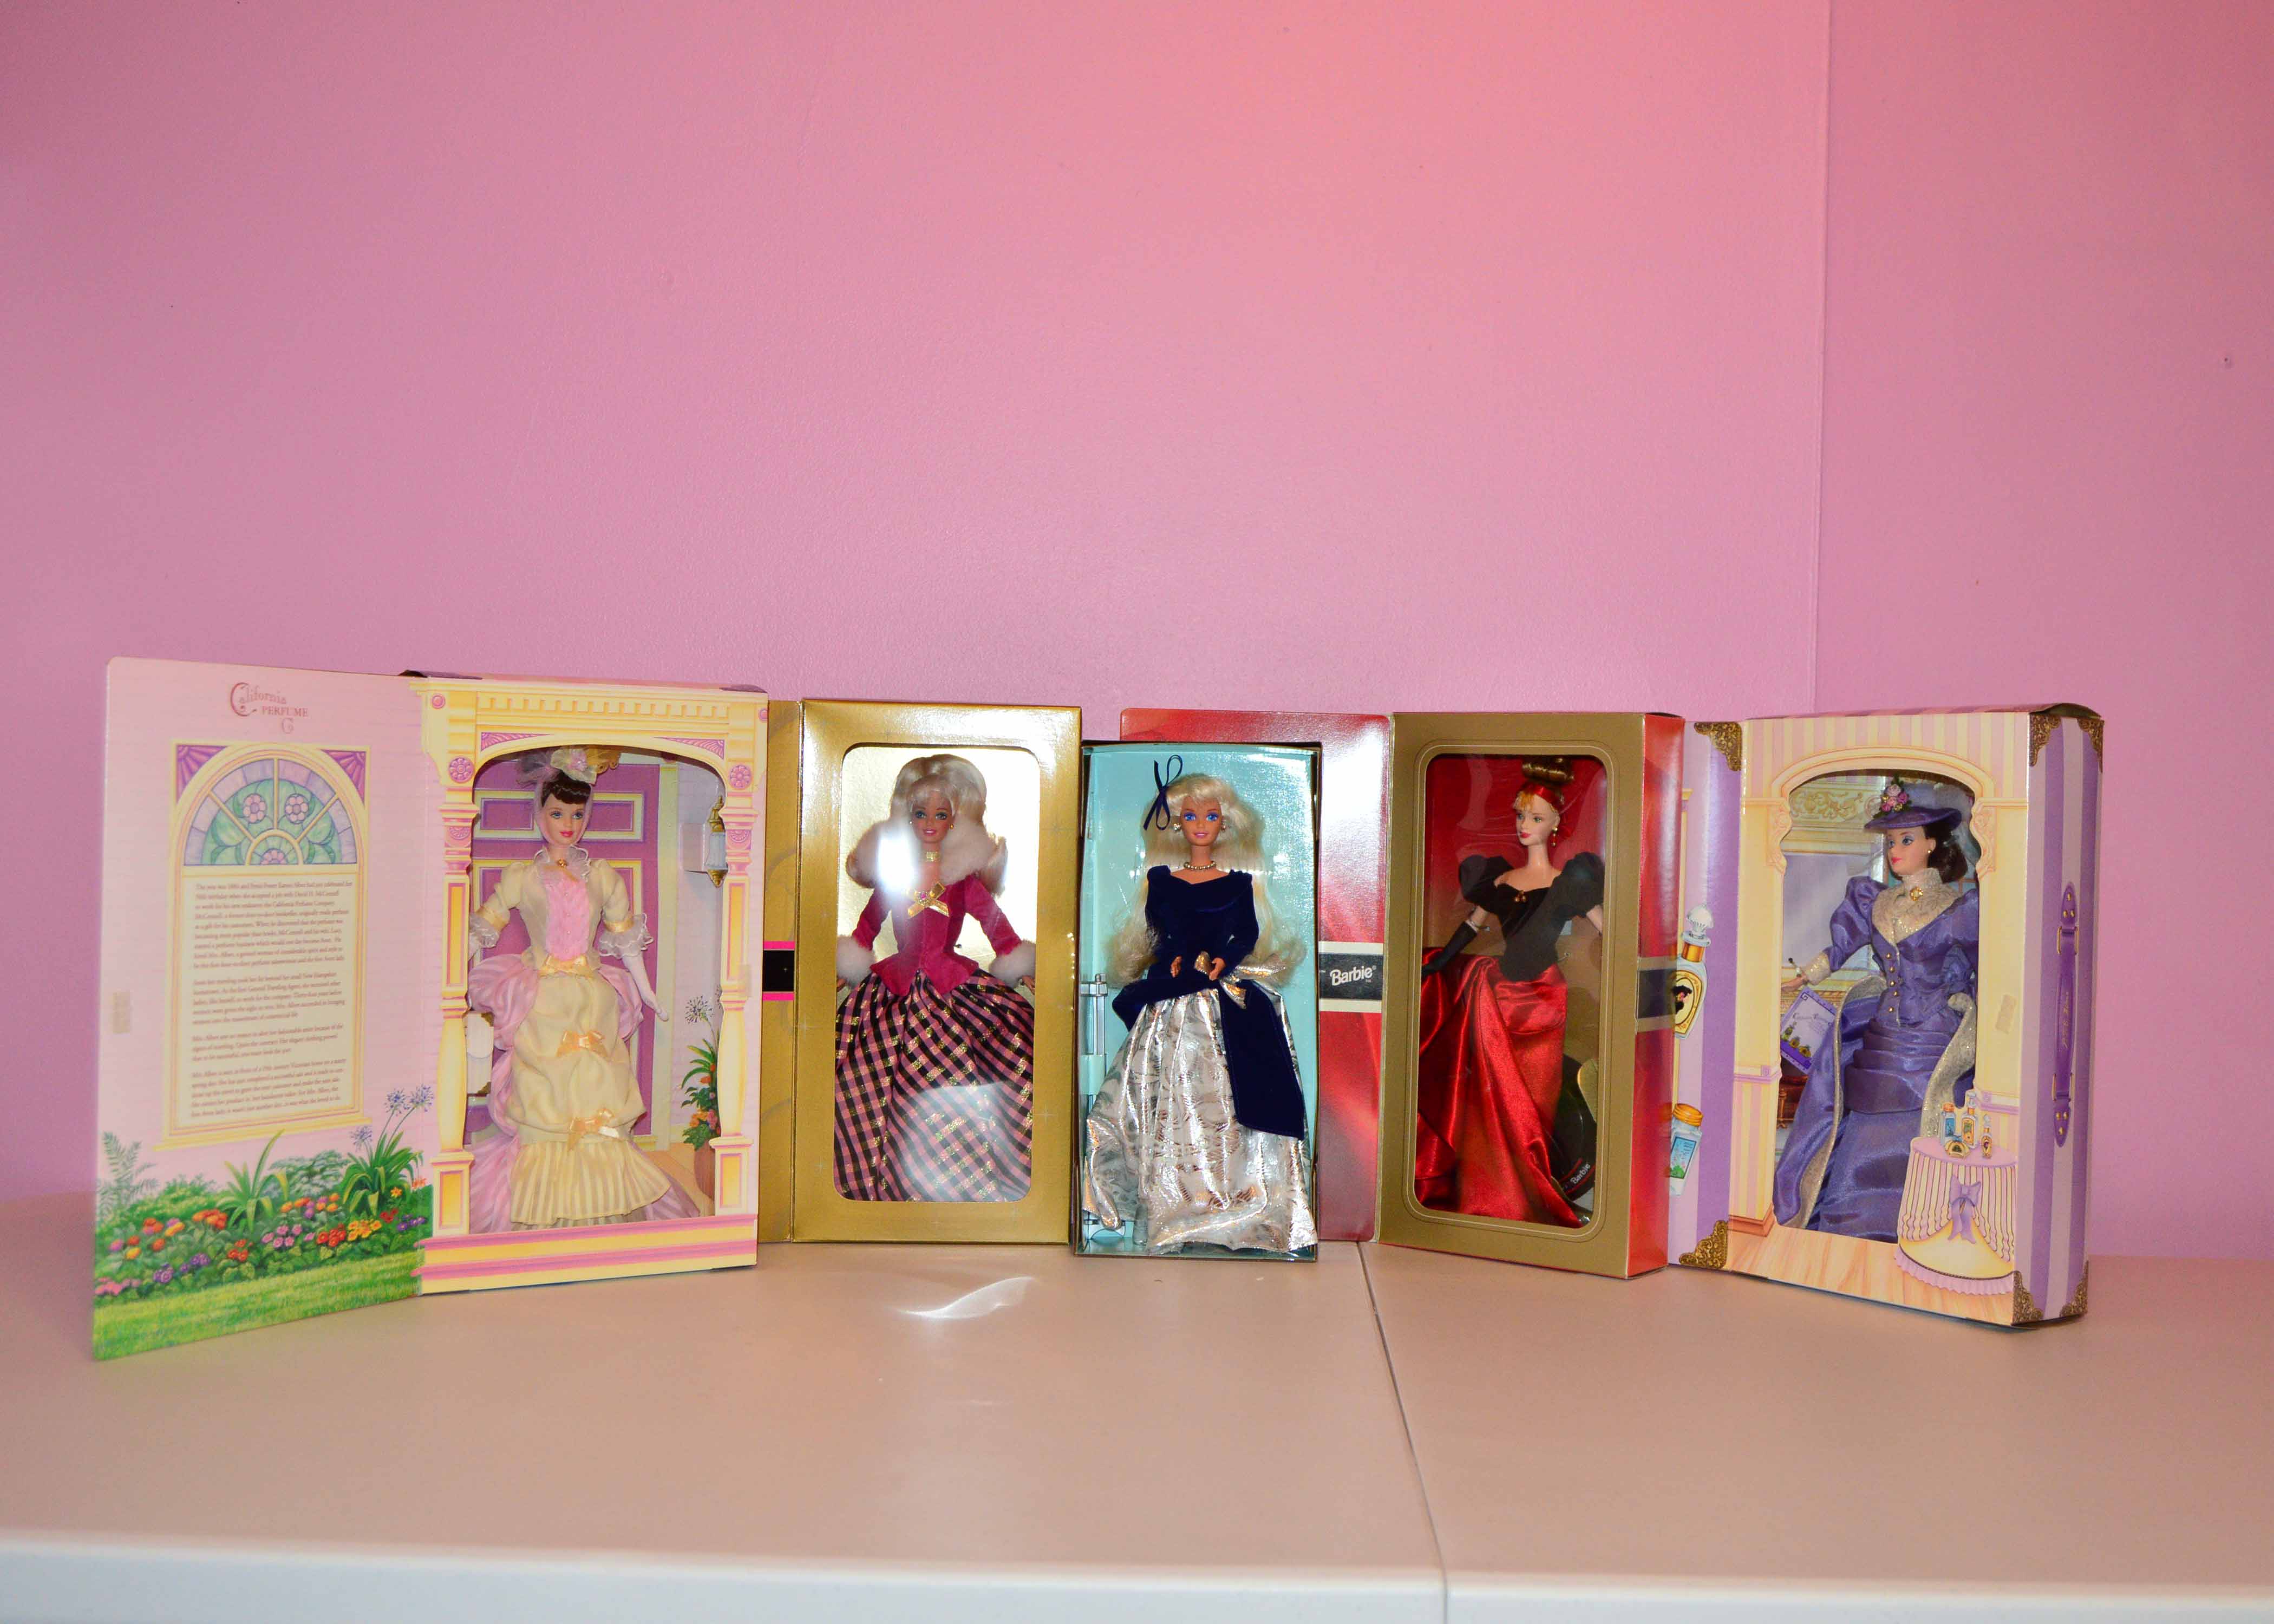 barbie avon collection